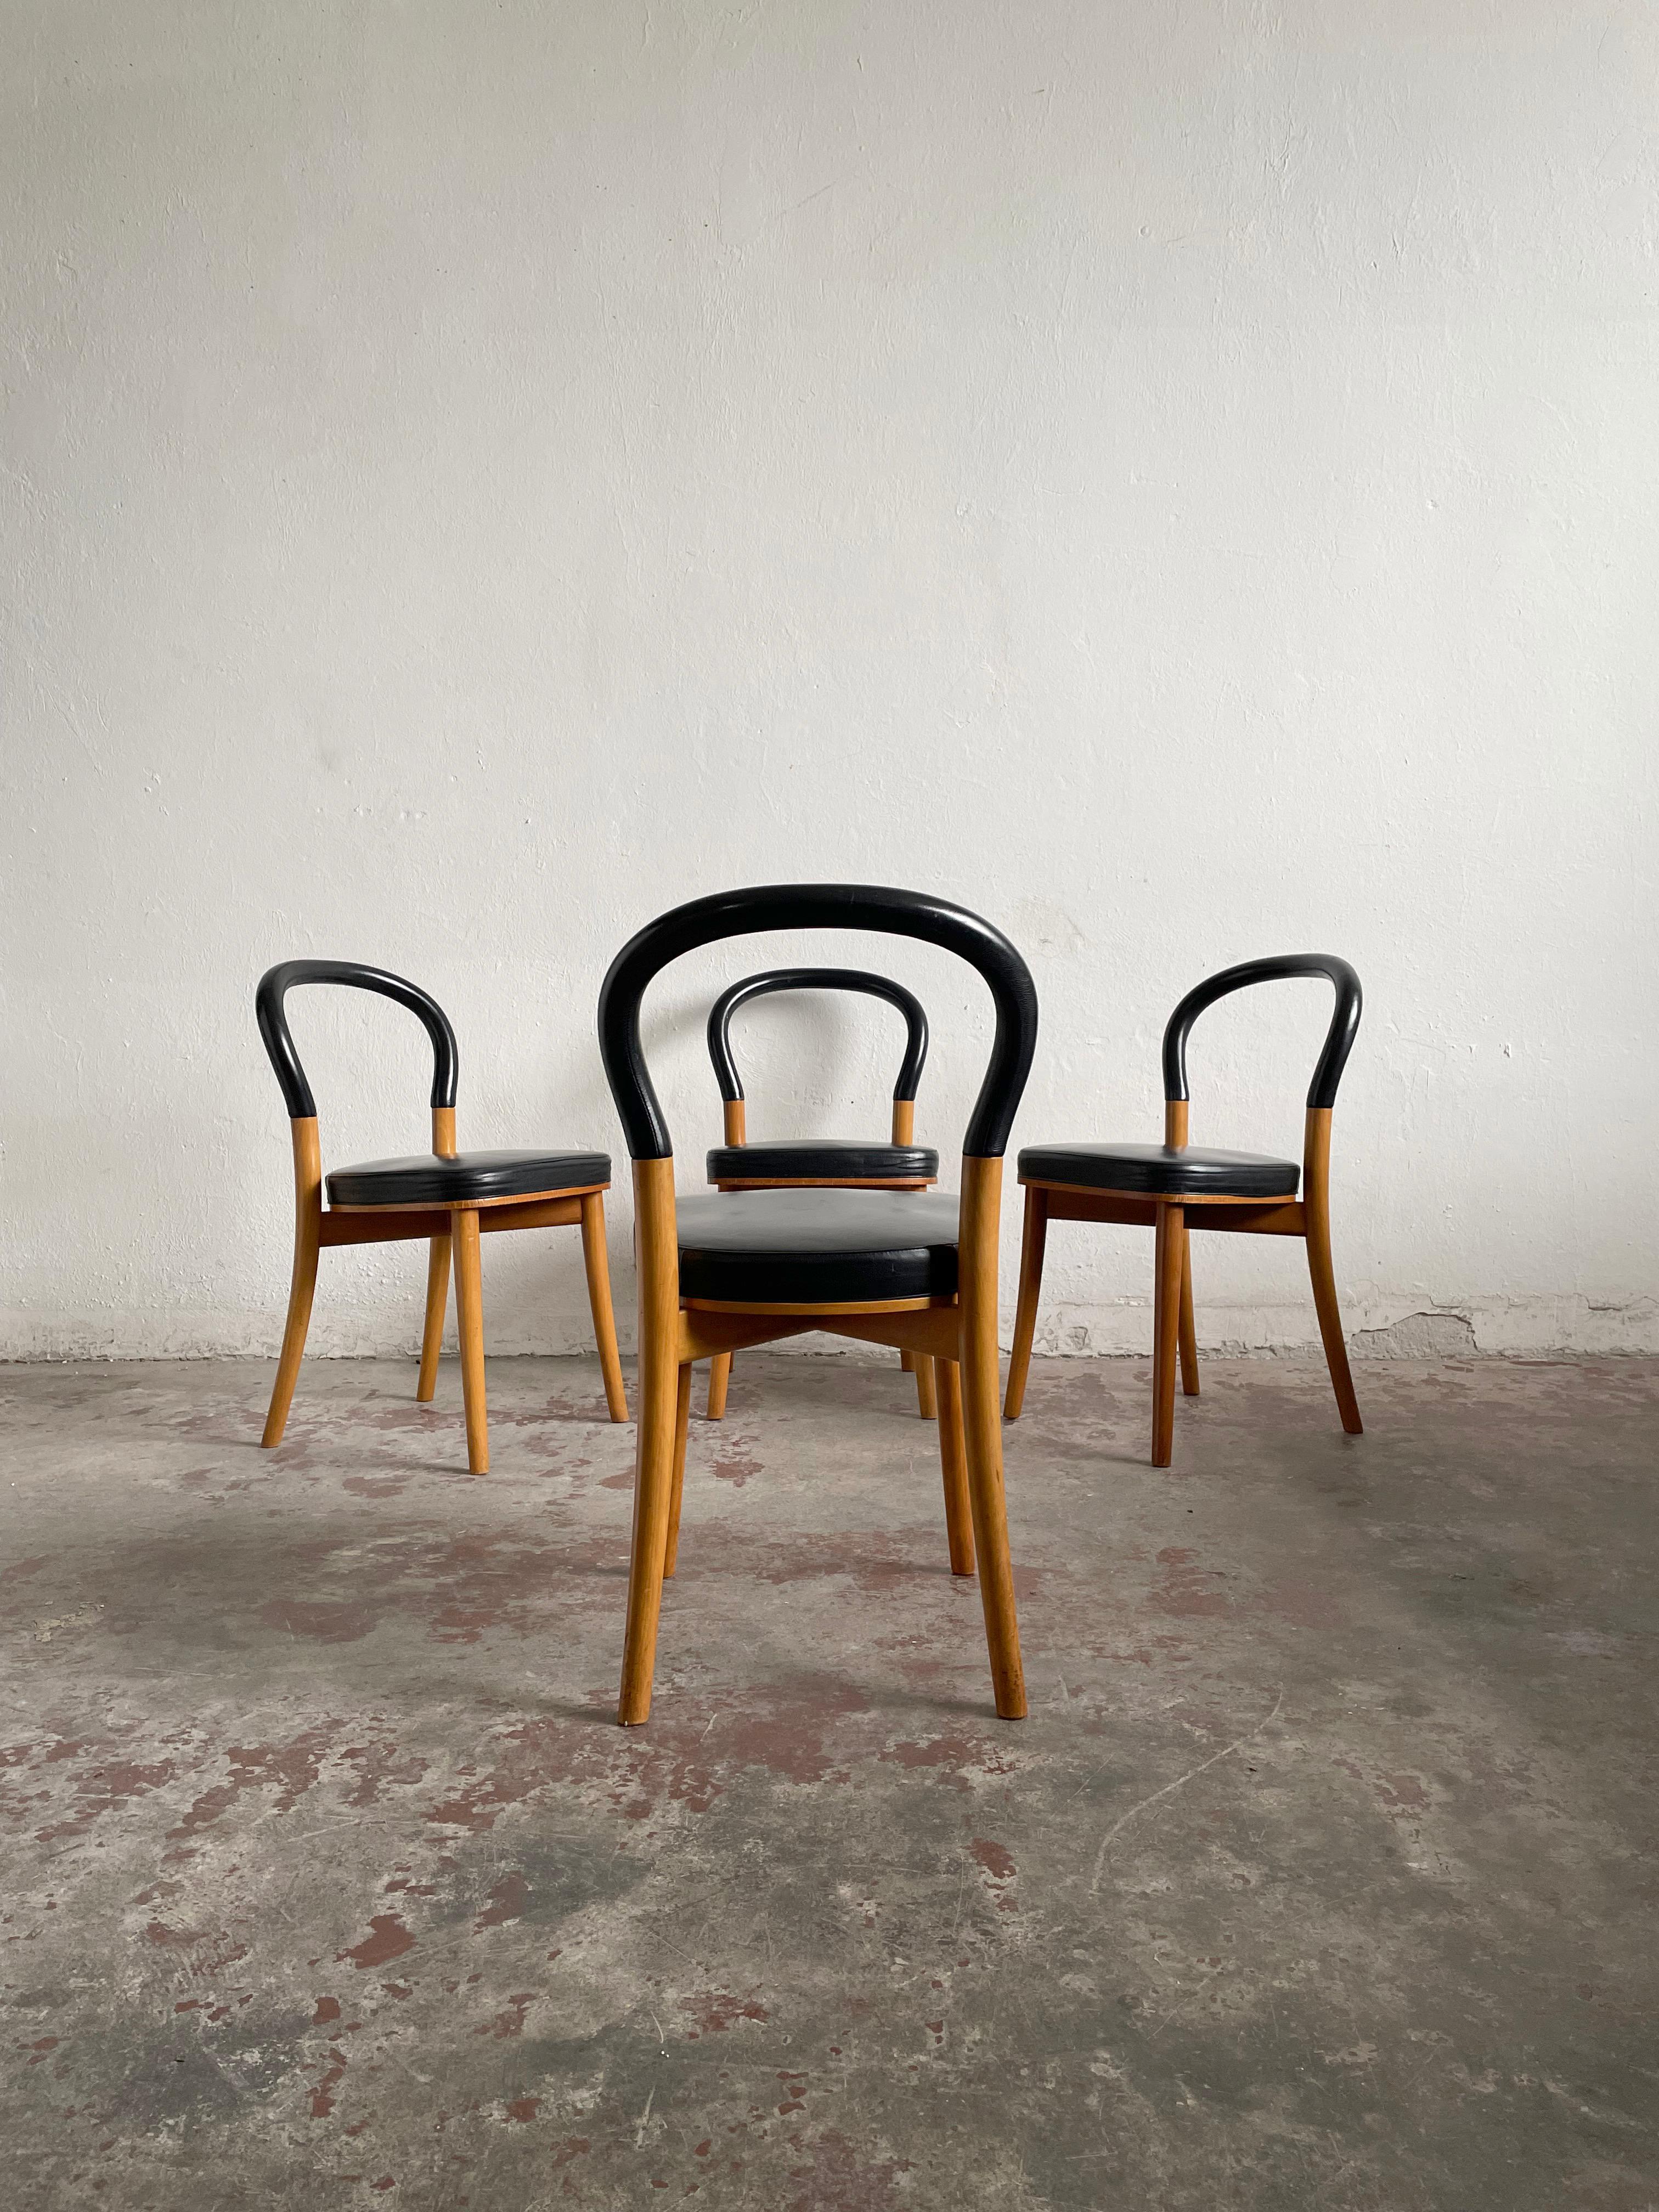 Bauhaus Set of Four 501 Göteborg Chairs by Cassina, design by Erik Gunnar Asplund